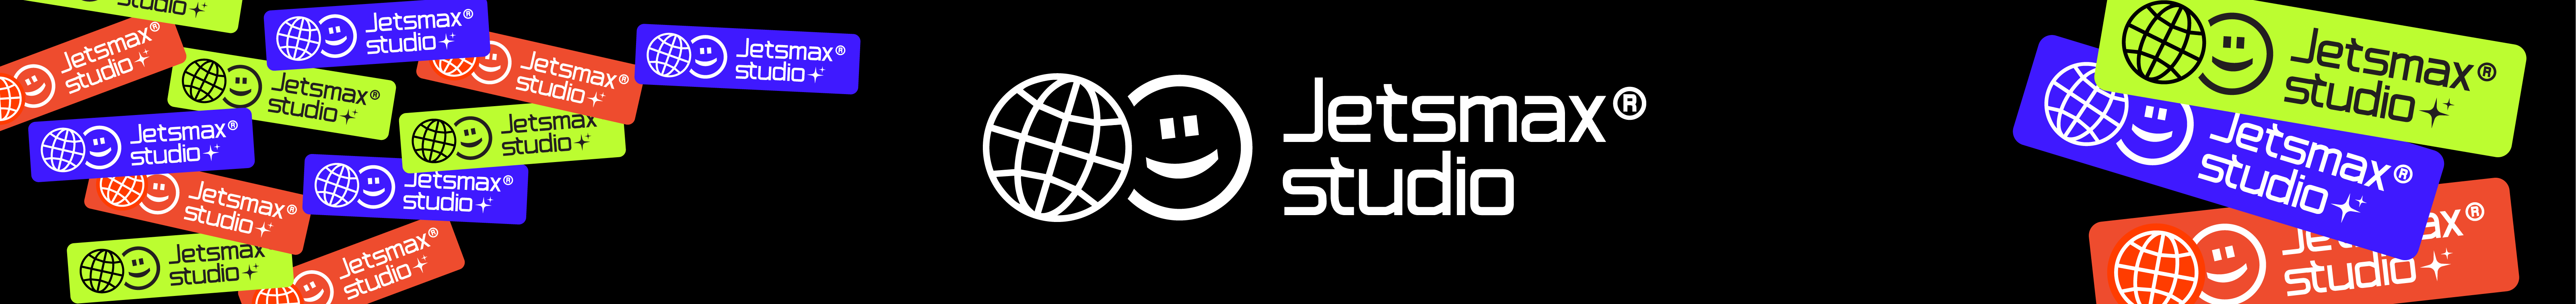 Banner de perfil de Jetsmax® Studio